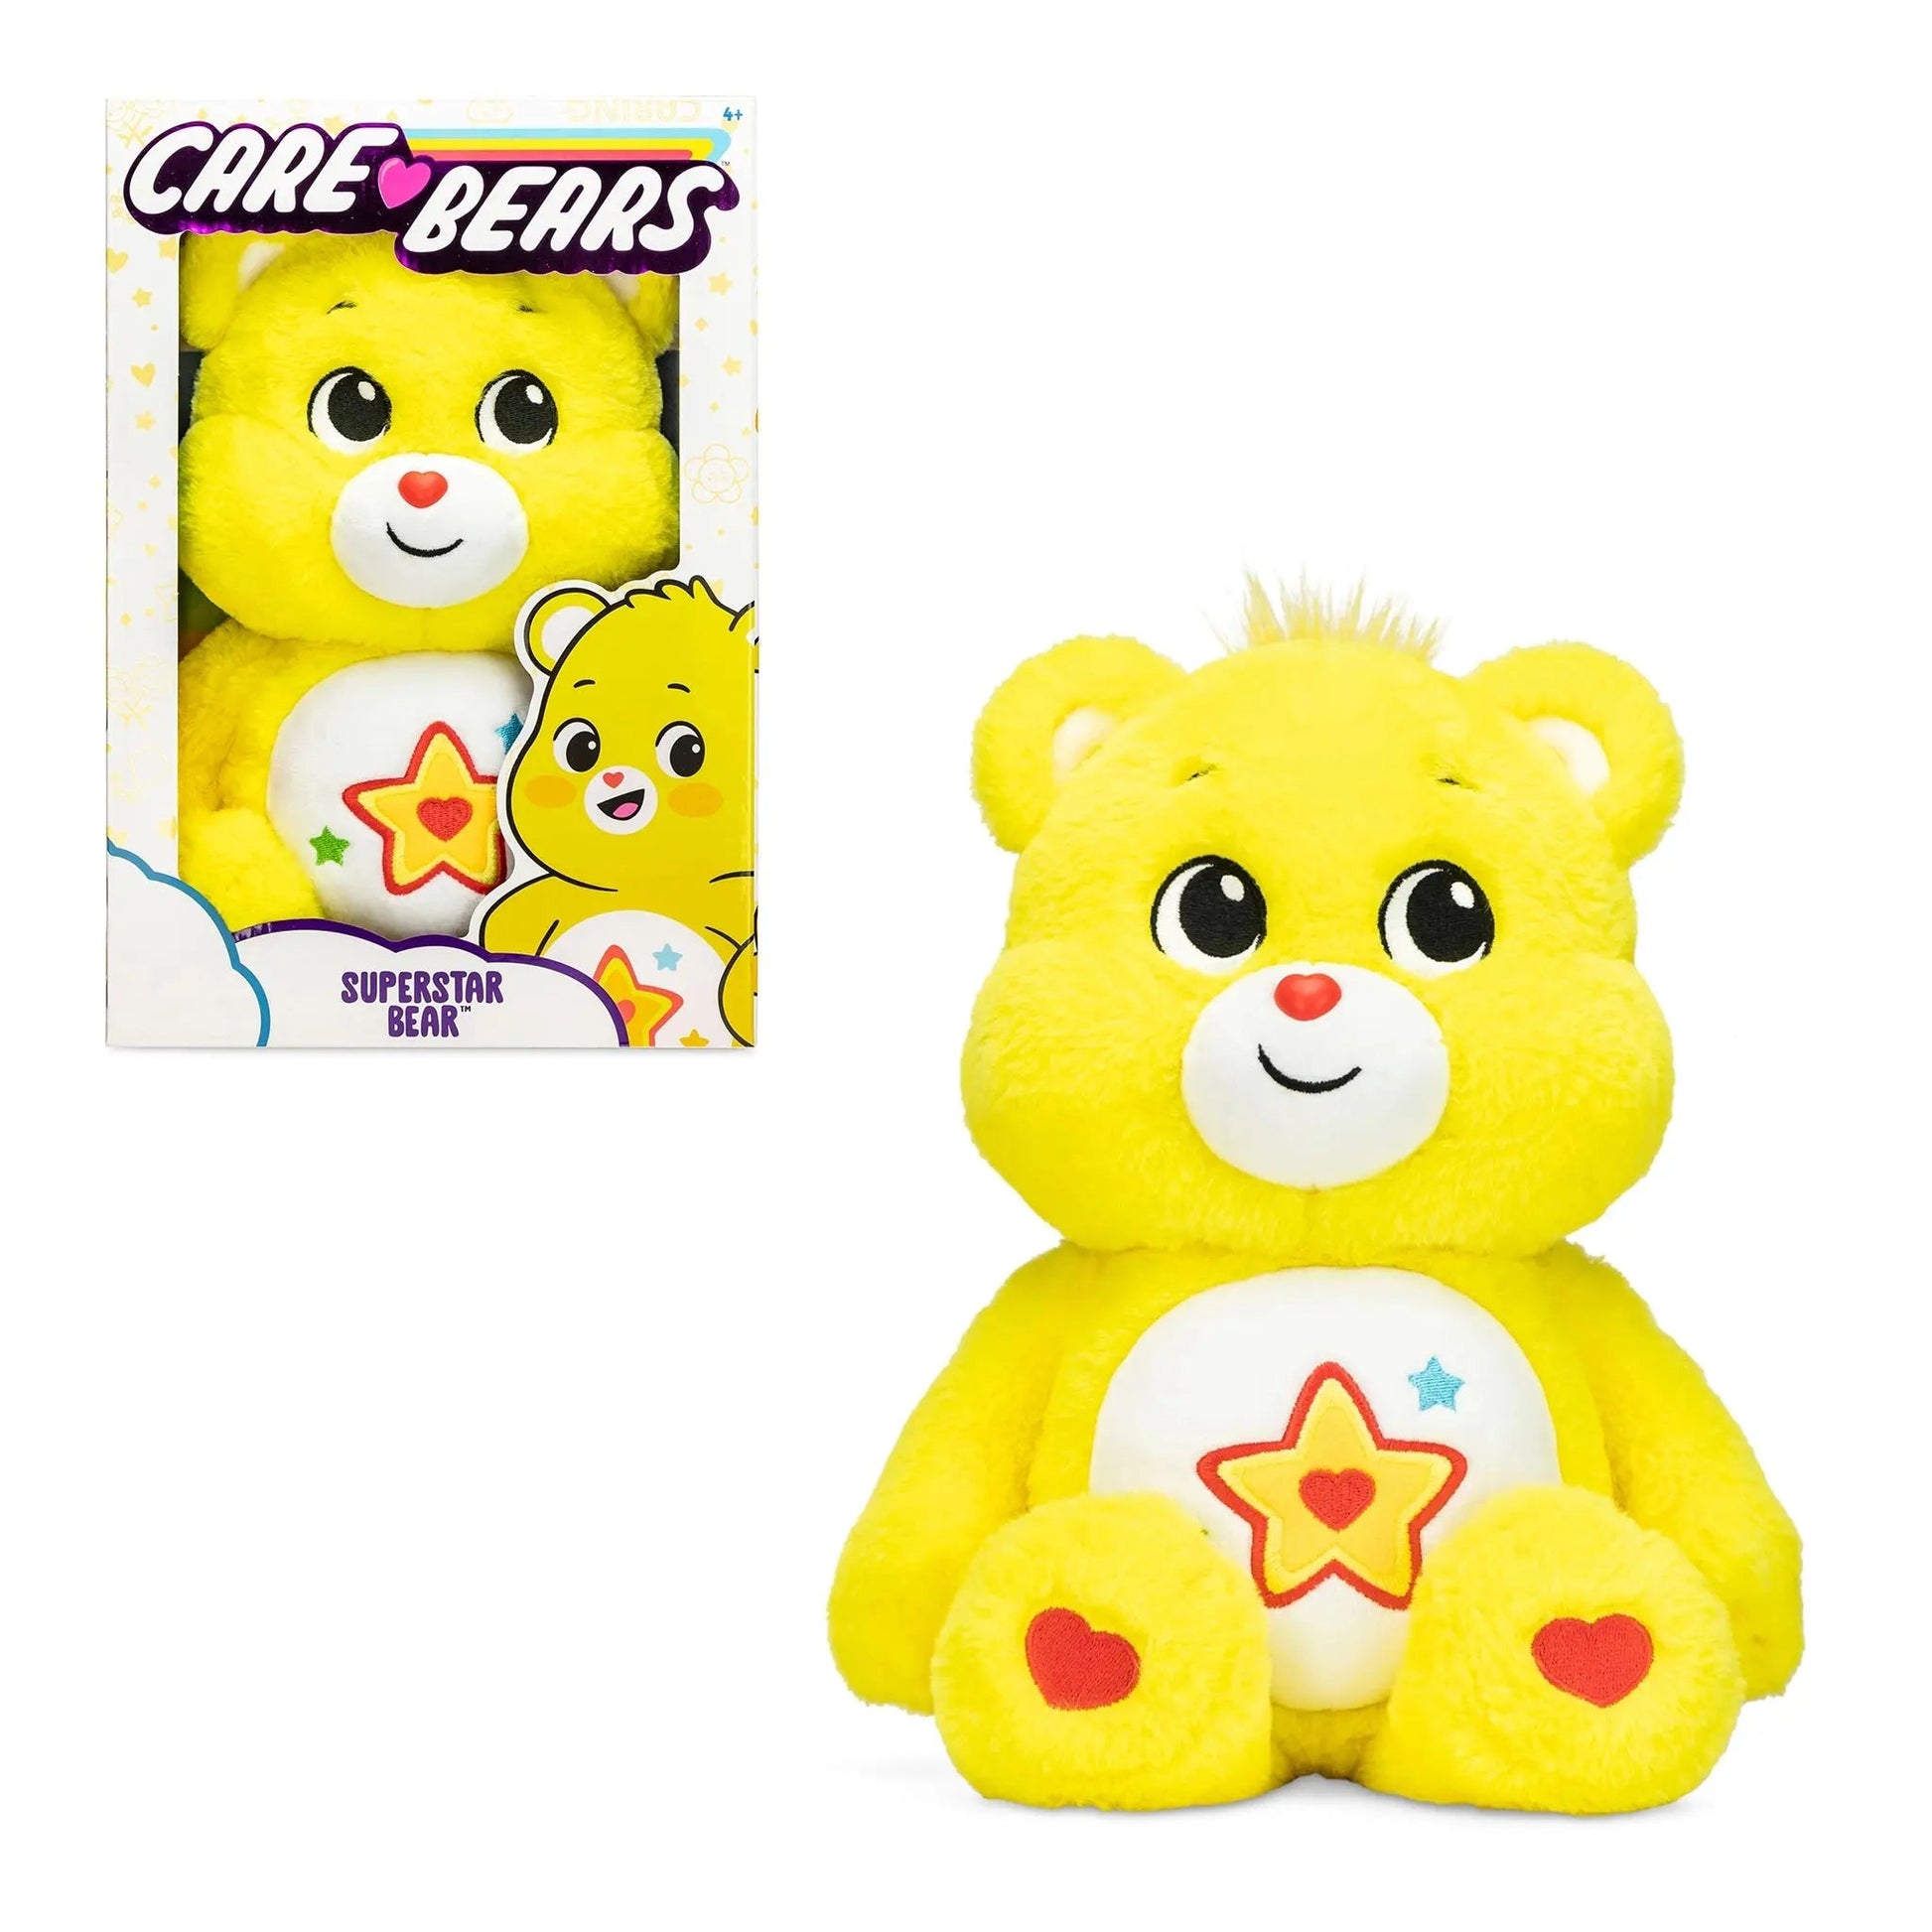 Care Bears 14" - Superstar Bear - ABGee - The Forgotten Toy Shop